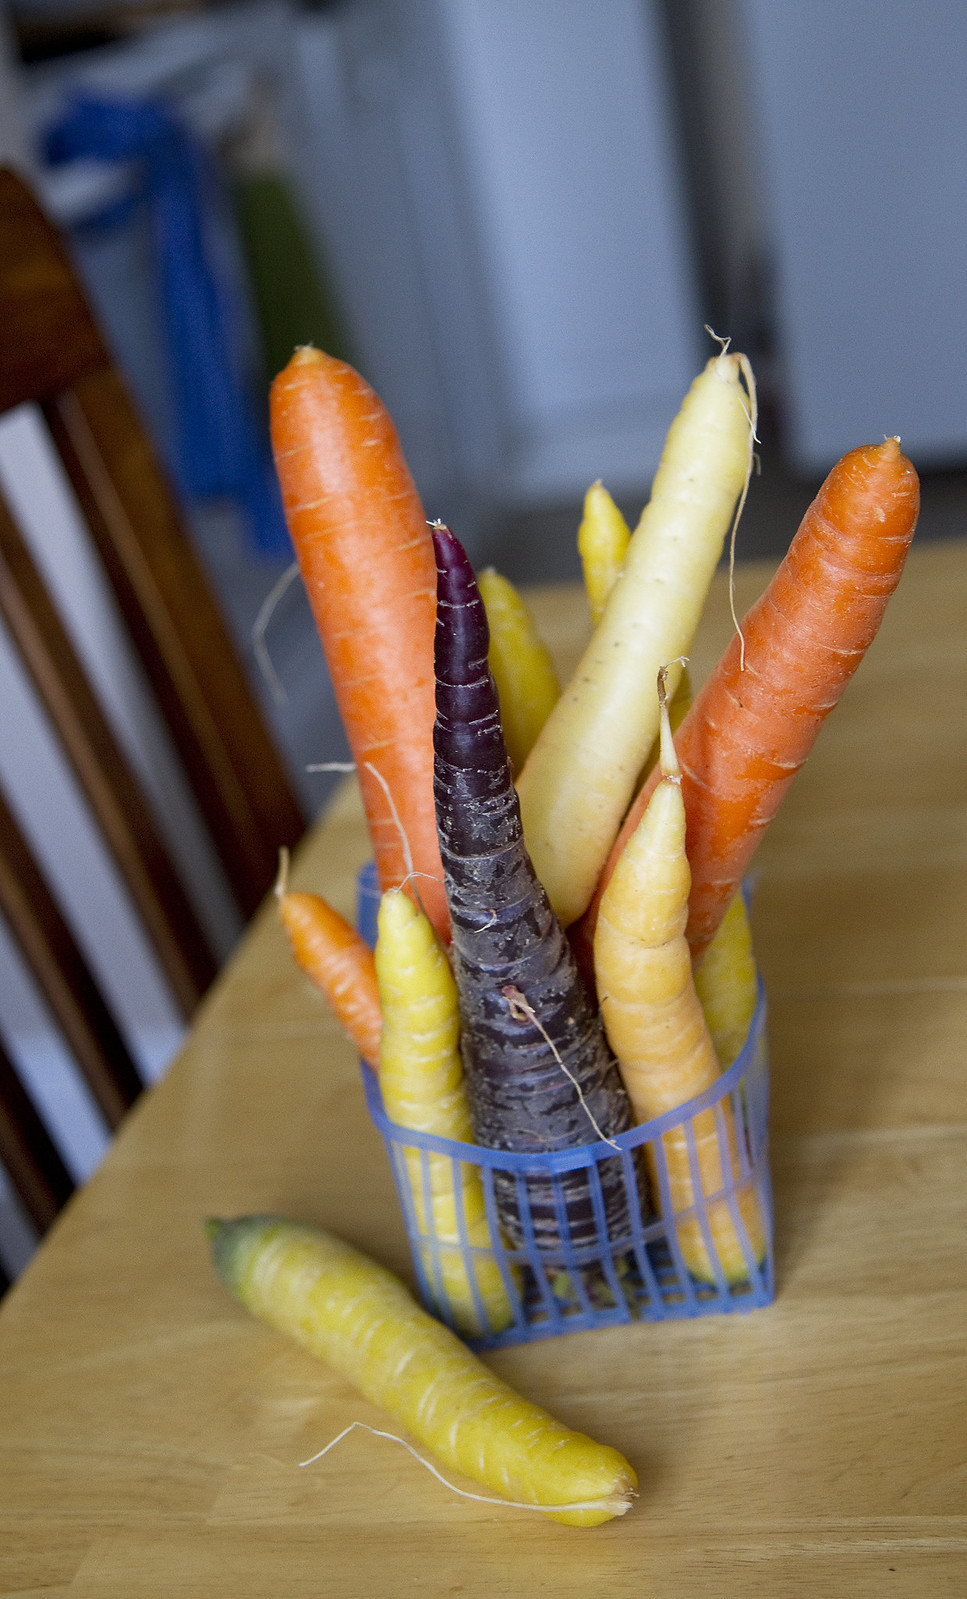 colourful carrots